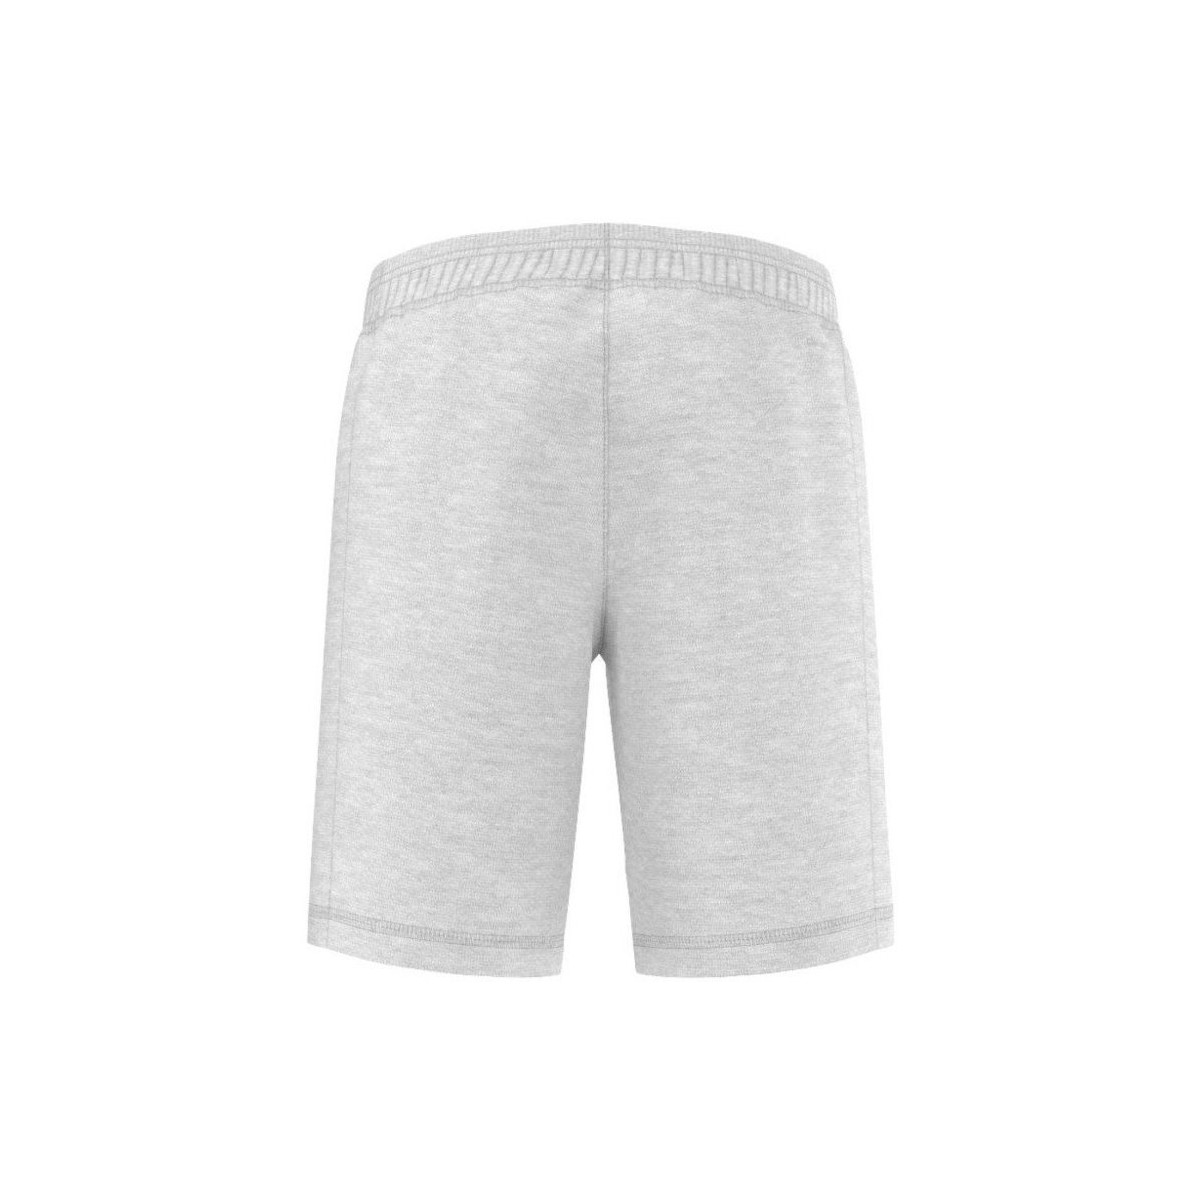 Abbigliamento Unisex bambino Shorts / Bermuda adidas Originals Bermuda Bambino Grigio